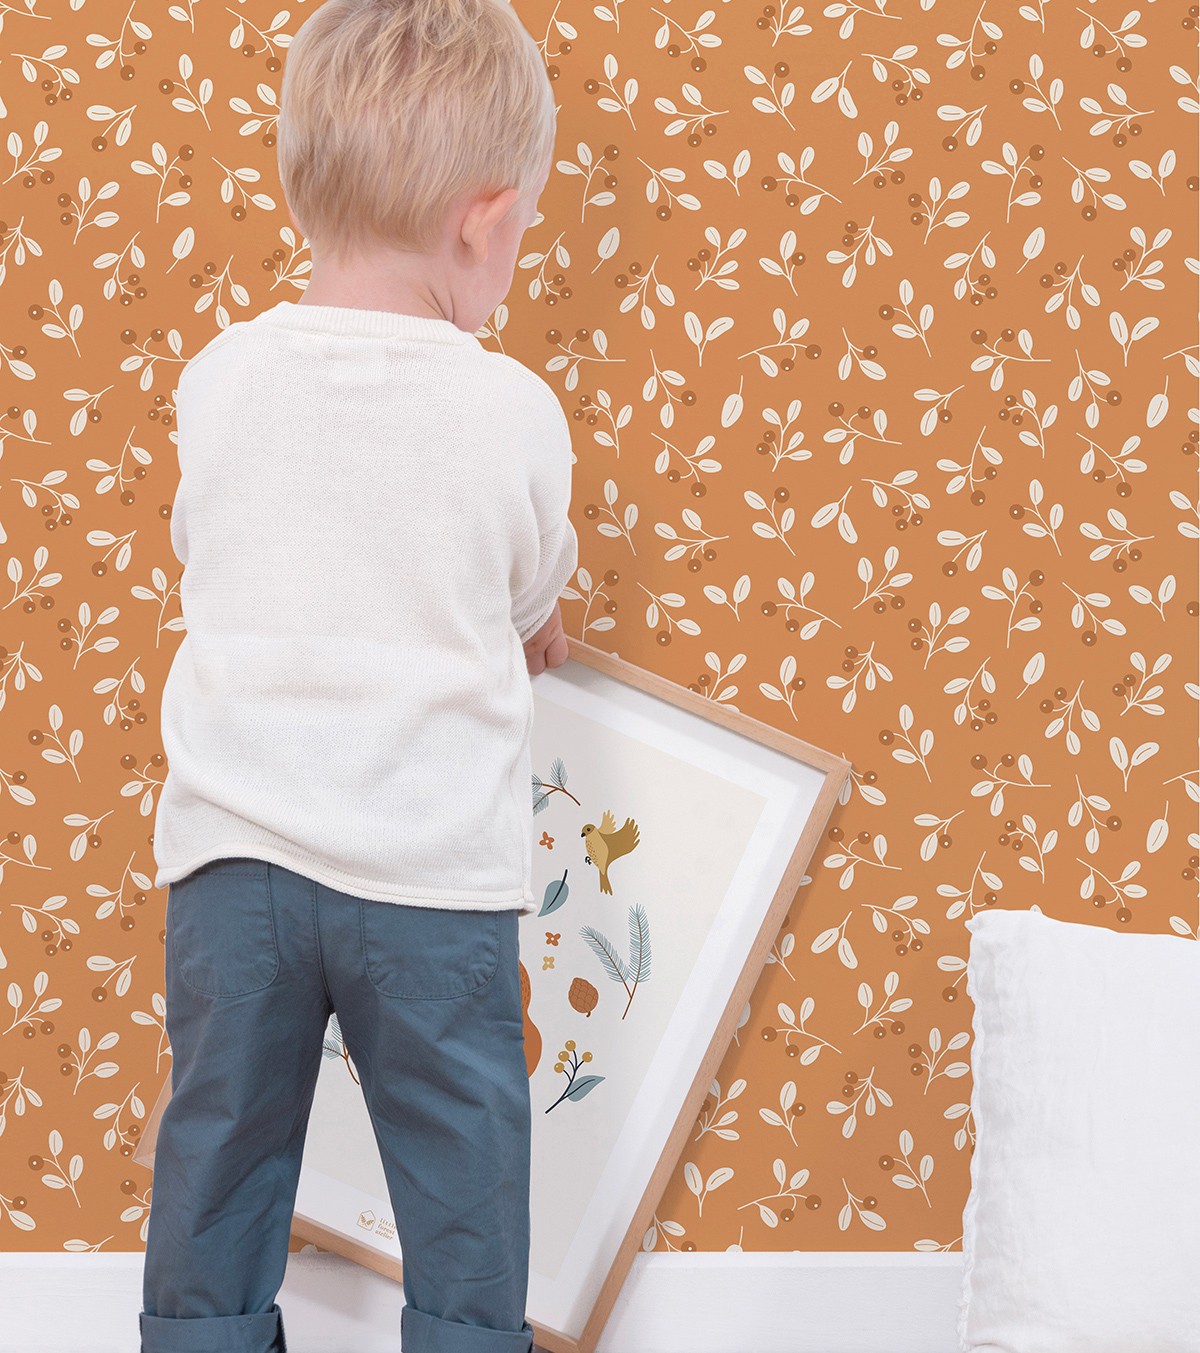 JÖRO - Children's wallpaper - Bay and leaf motif